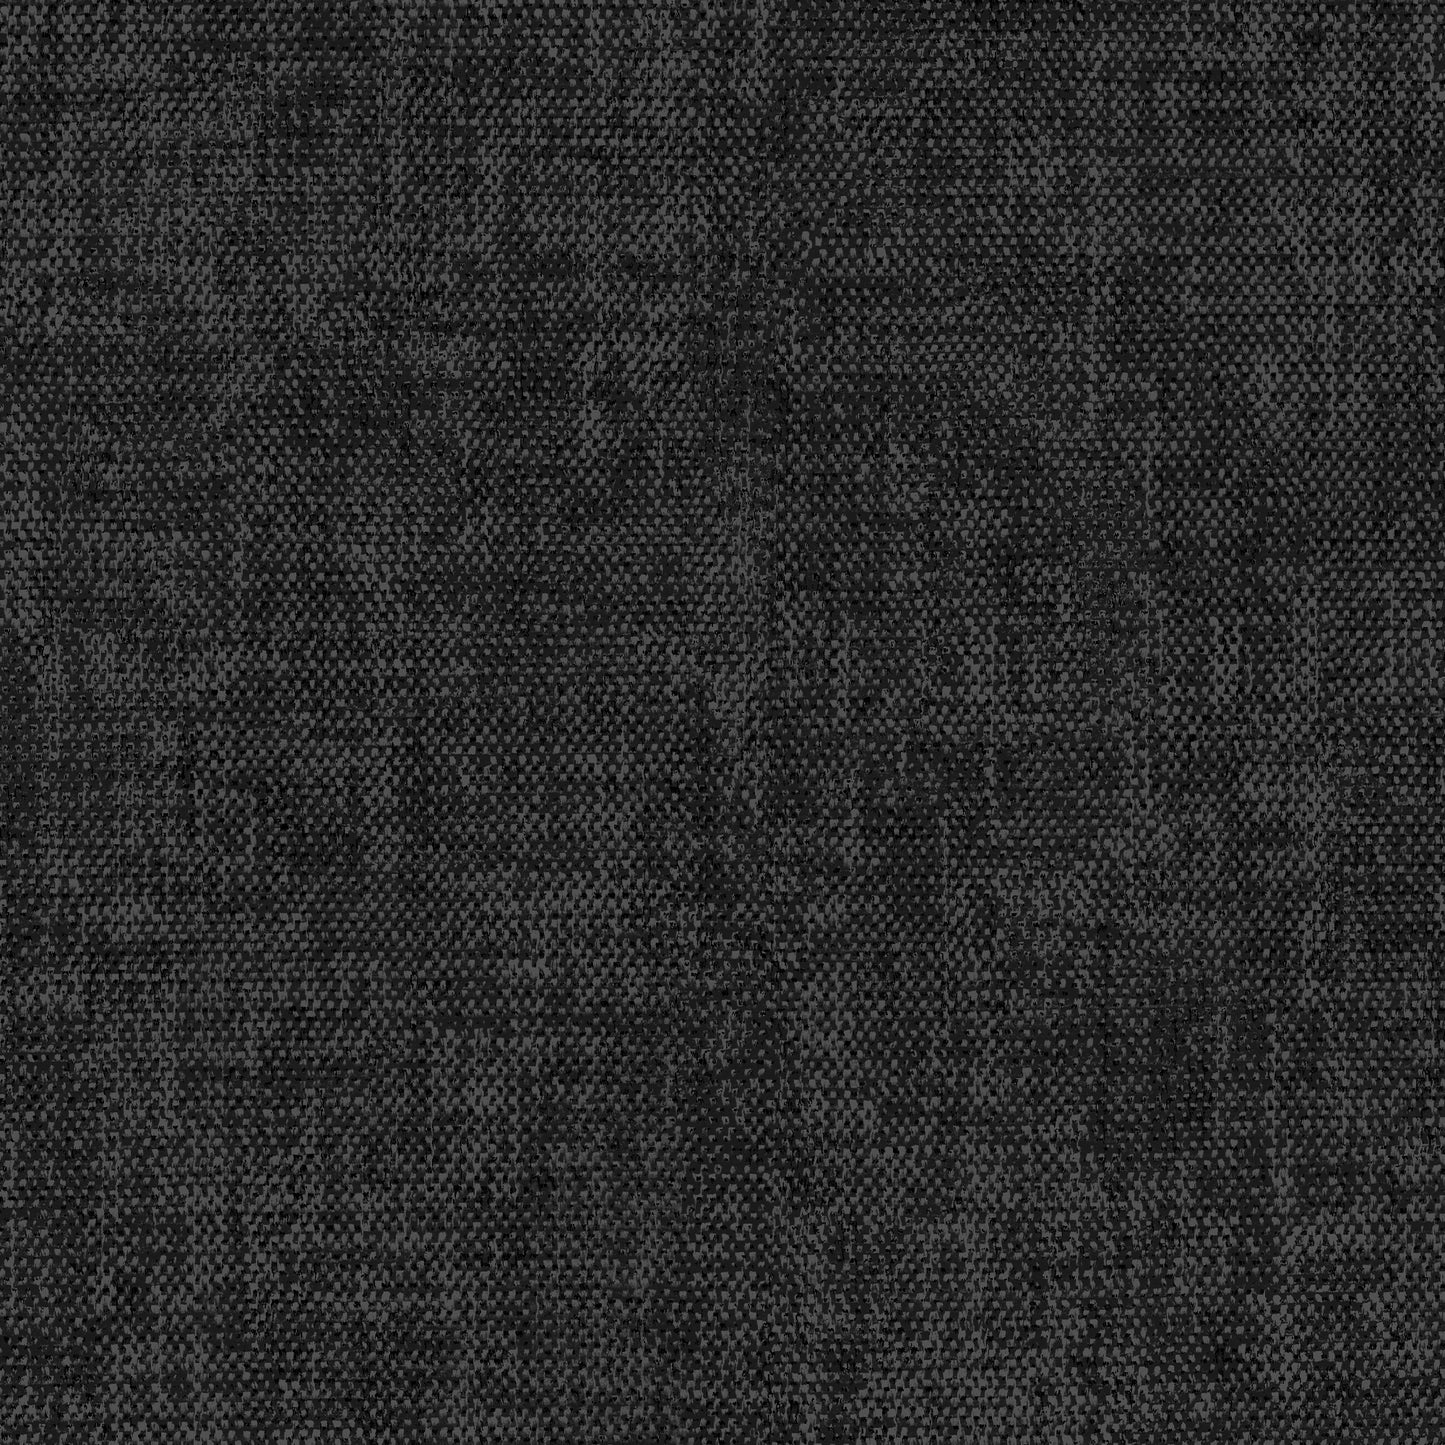 Graham & Brown Zara Charcoal Black Wallpaper (122416)